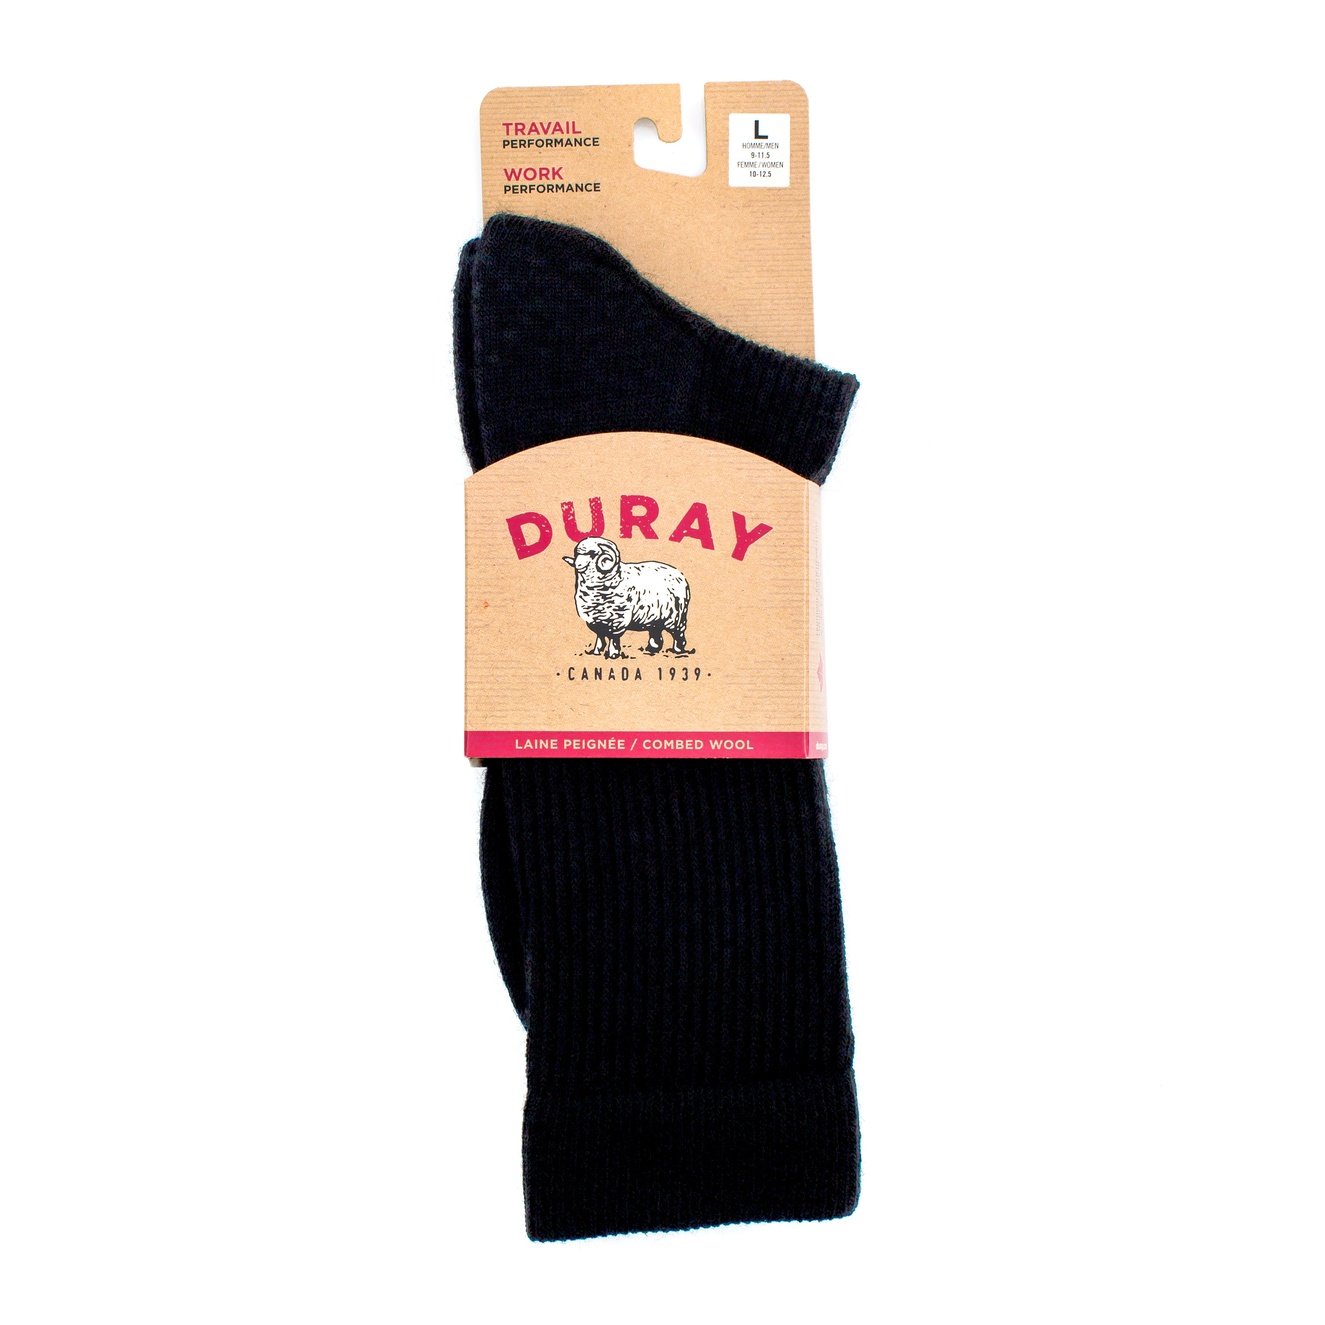 Duray - Police Merino unisex socks